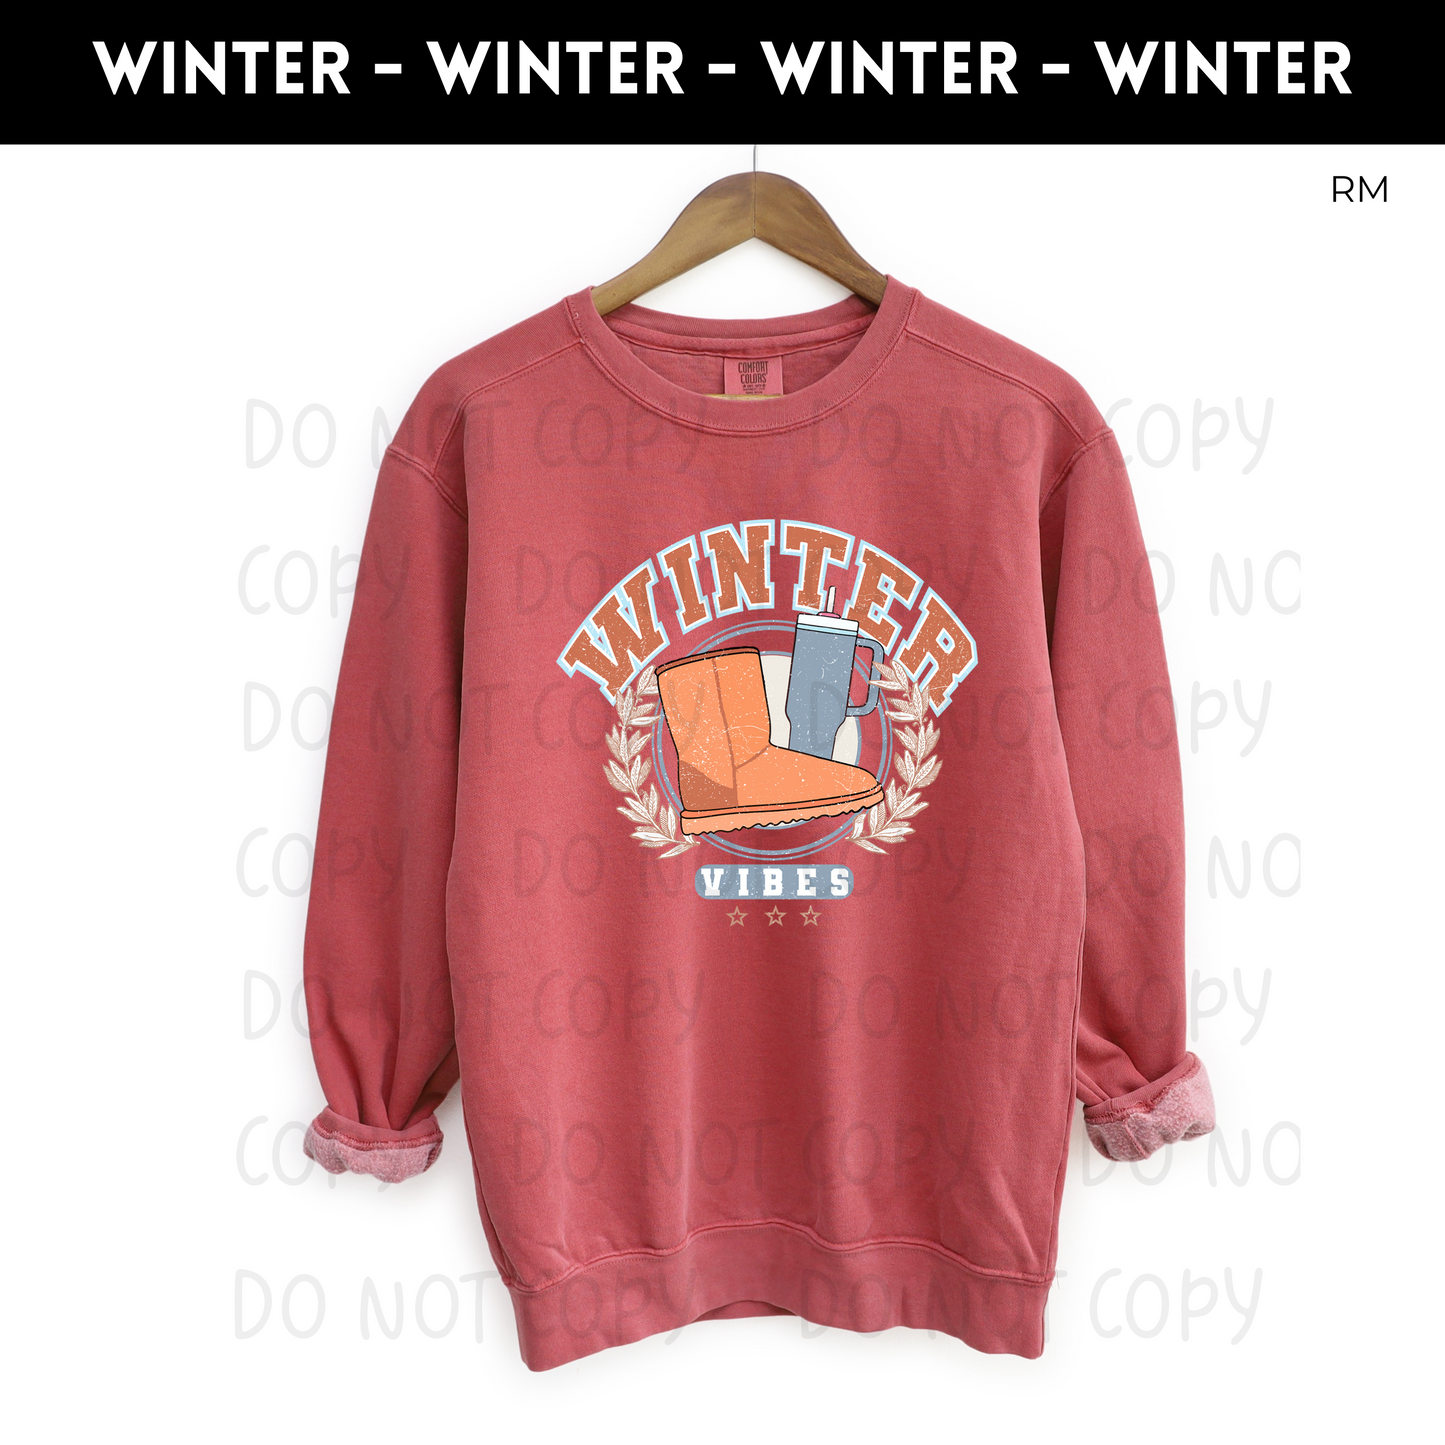 Winter Vibes Adult Sweatshirt- Winter 7